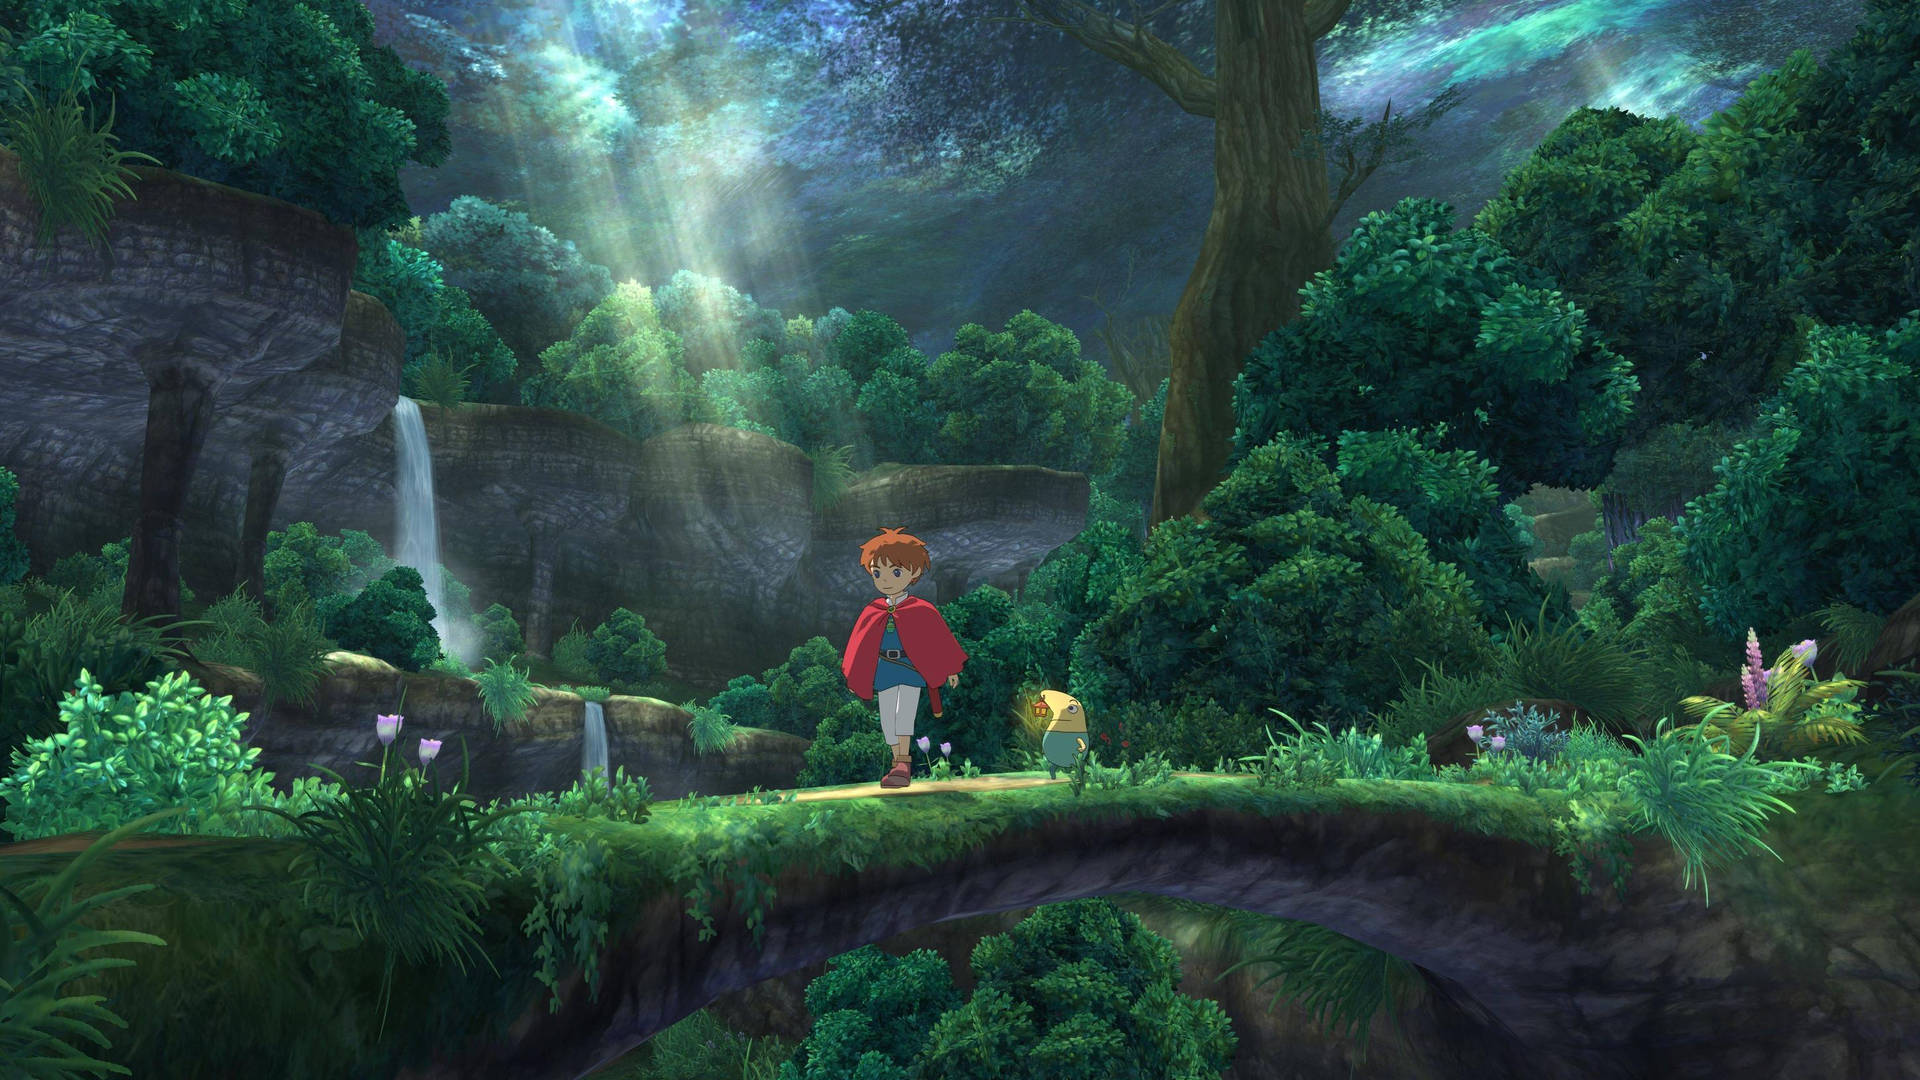 Beautiful Studio Ghibli Scenery Forest Wallpaper